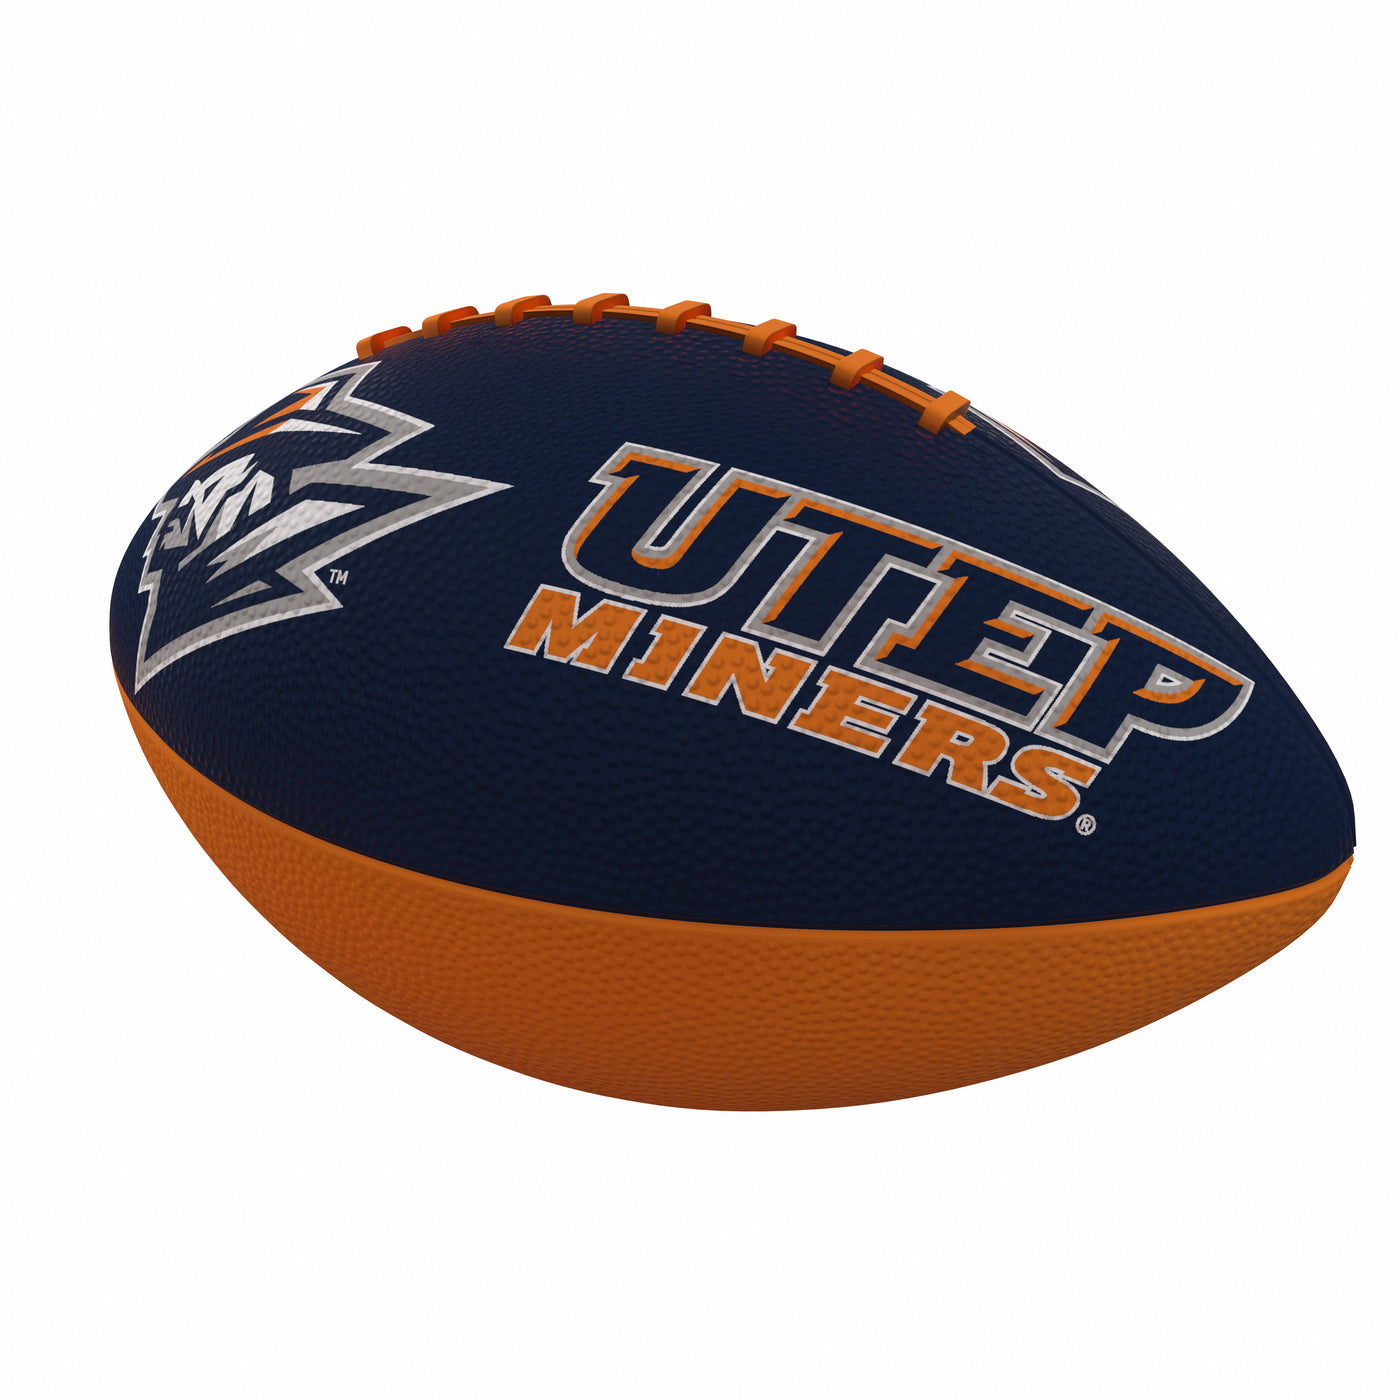 UTEP Combo Logo Junior-Size Rubber Football